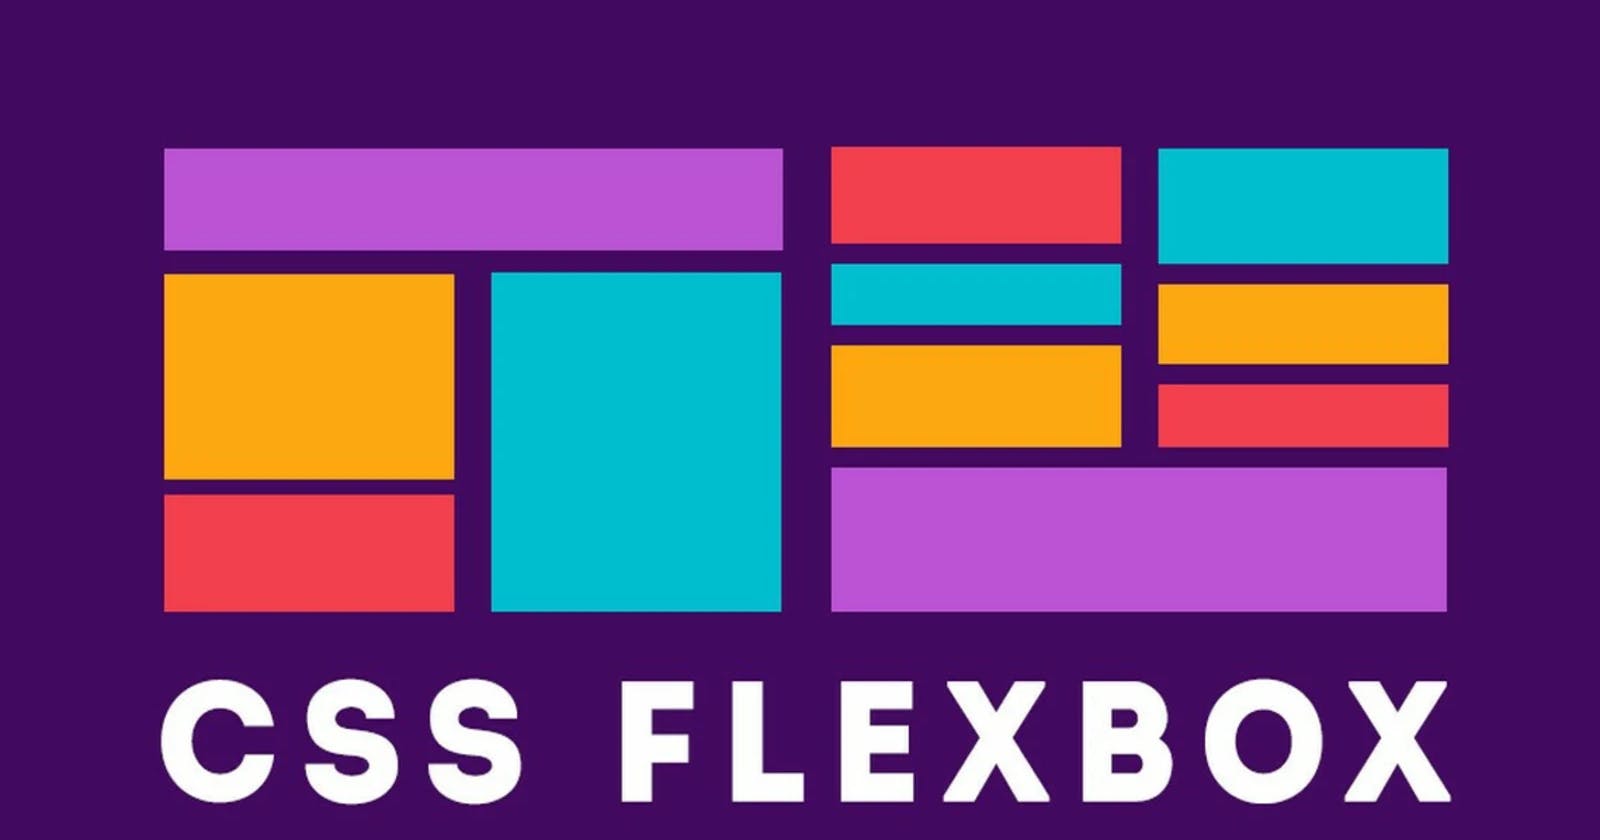 Flexbox and it's Properties